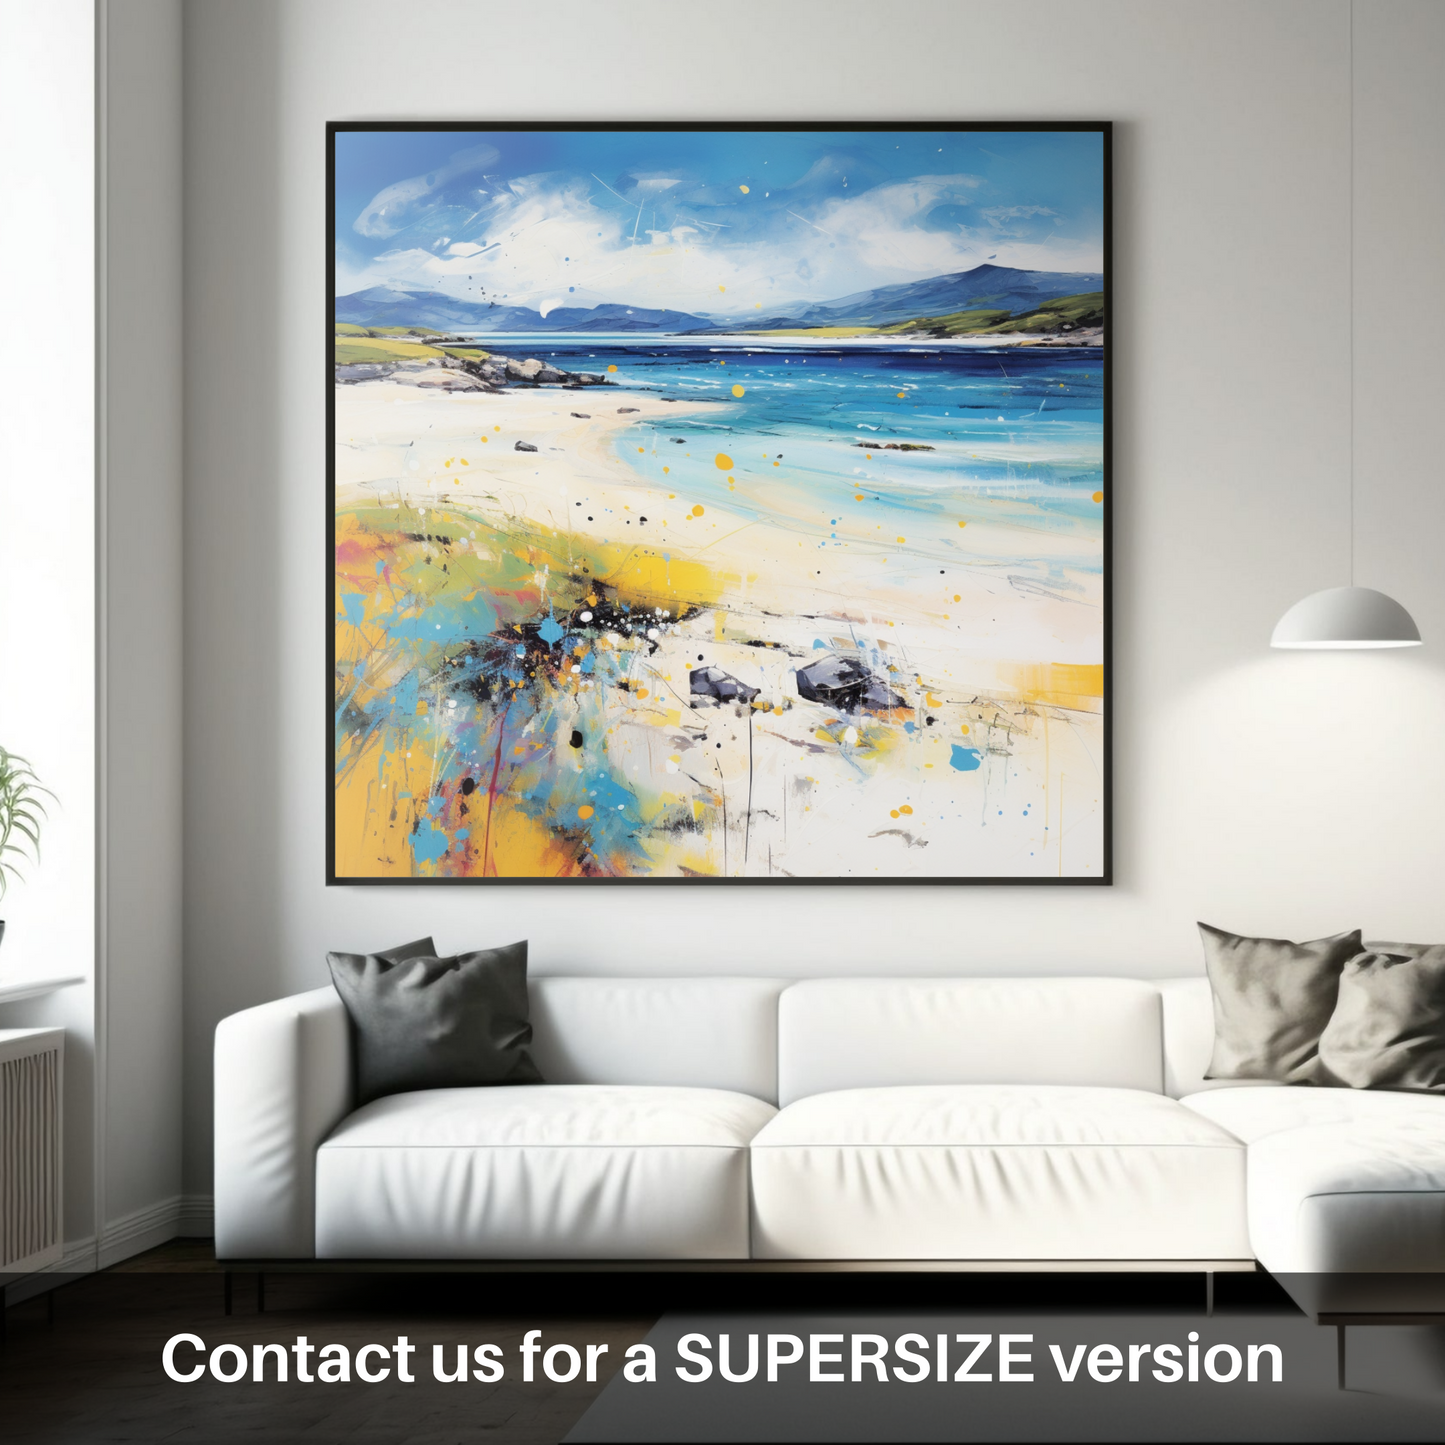 Huge supersize print of Scarista Beach, Isle of Harris in summer